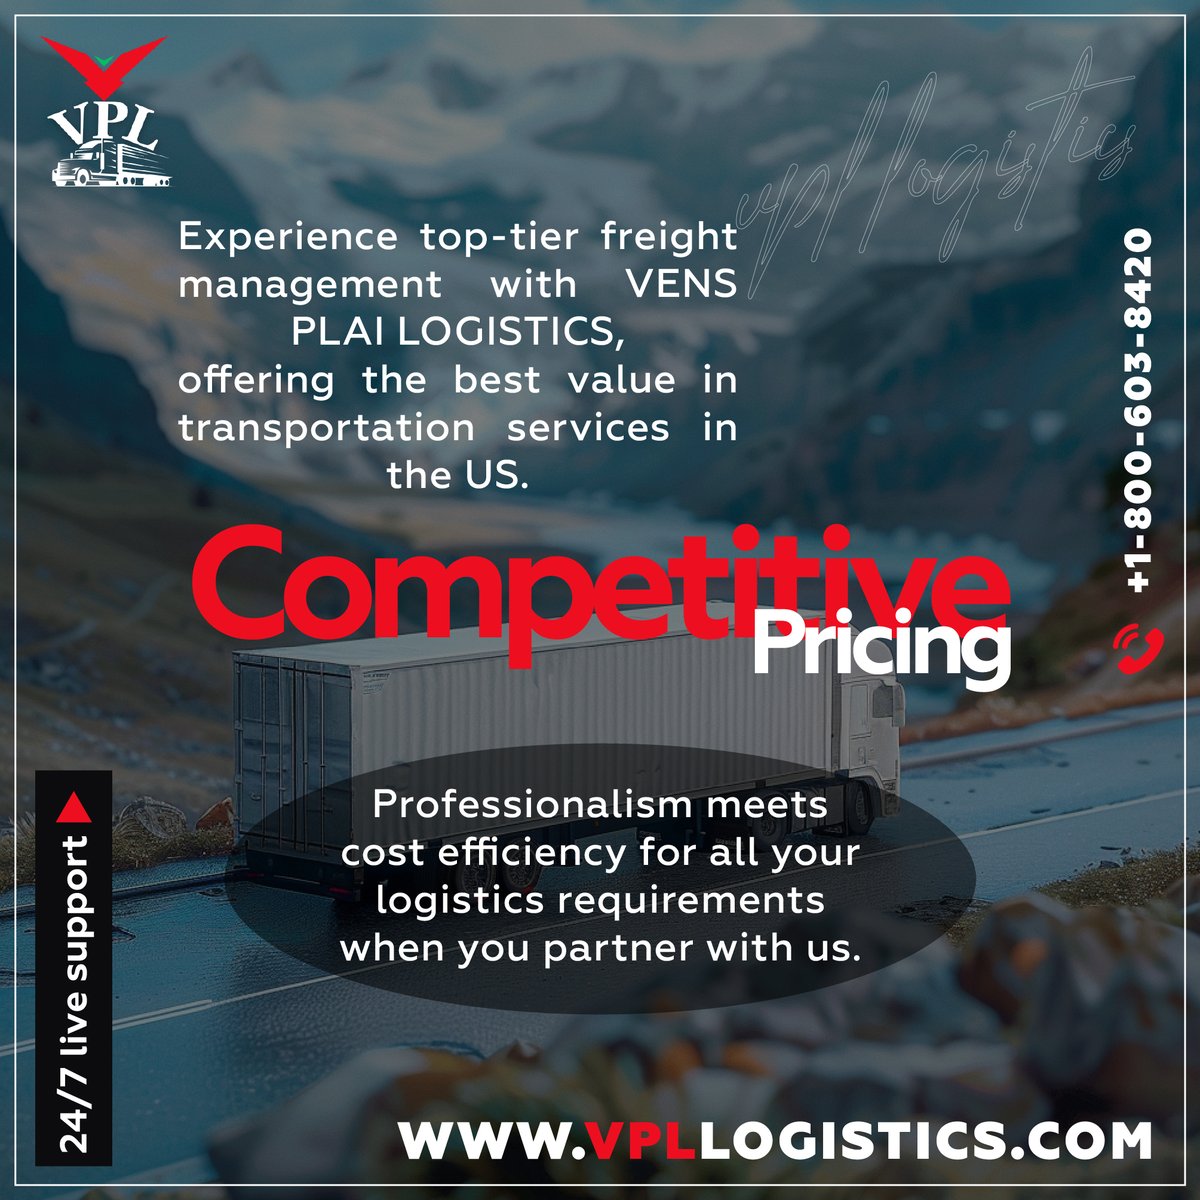 Competitive pricing

Experience top-tier freight management with VENS PLAI LOGISTICS

#vpllogistics #freightrecession #vensplailogistics